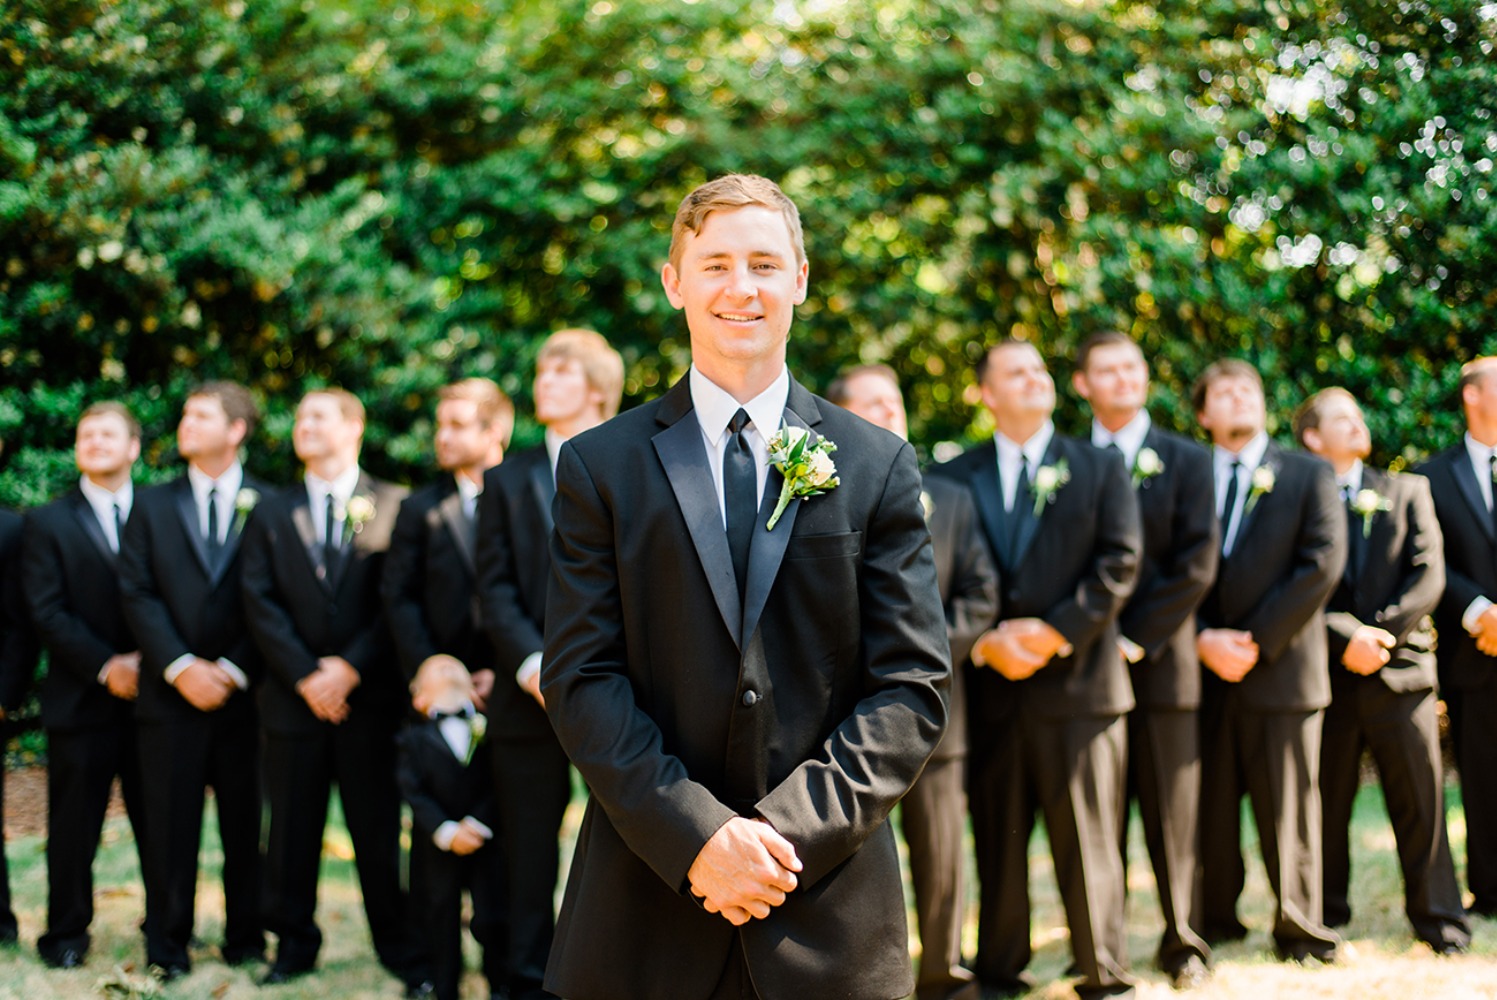 groom and groomsmen in classic black suits